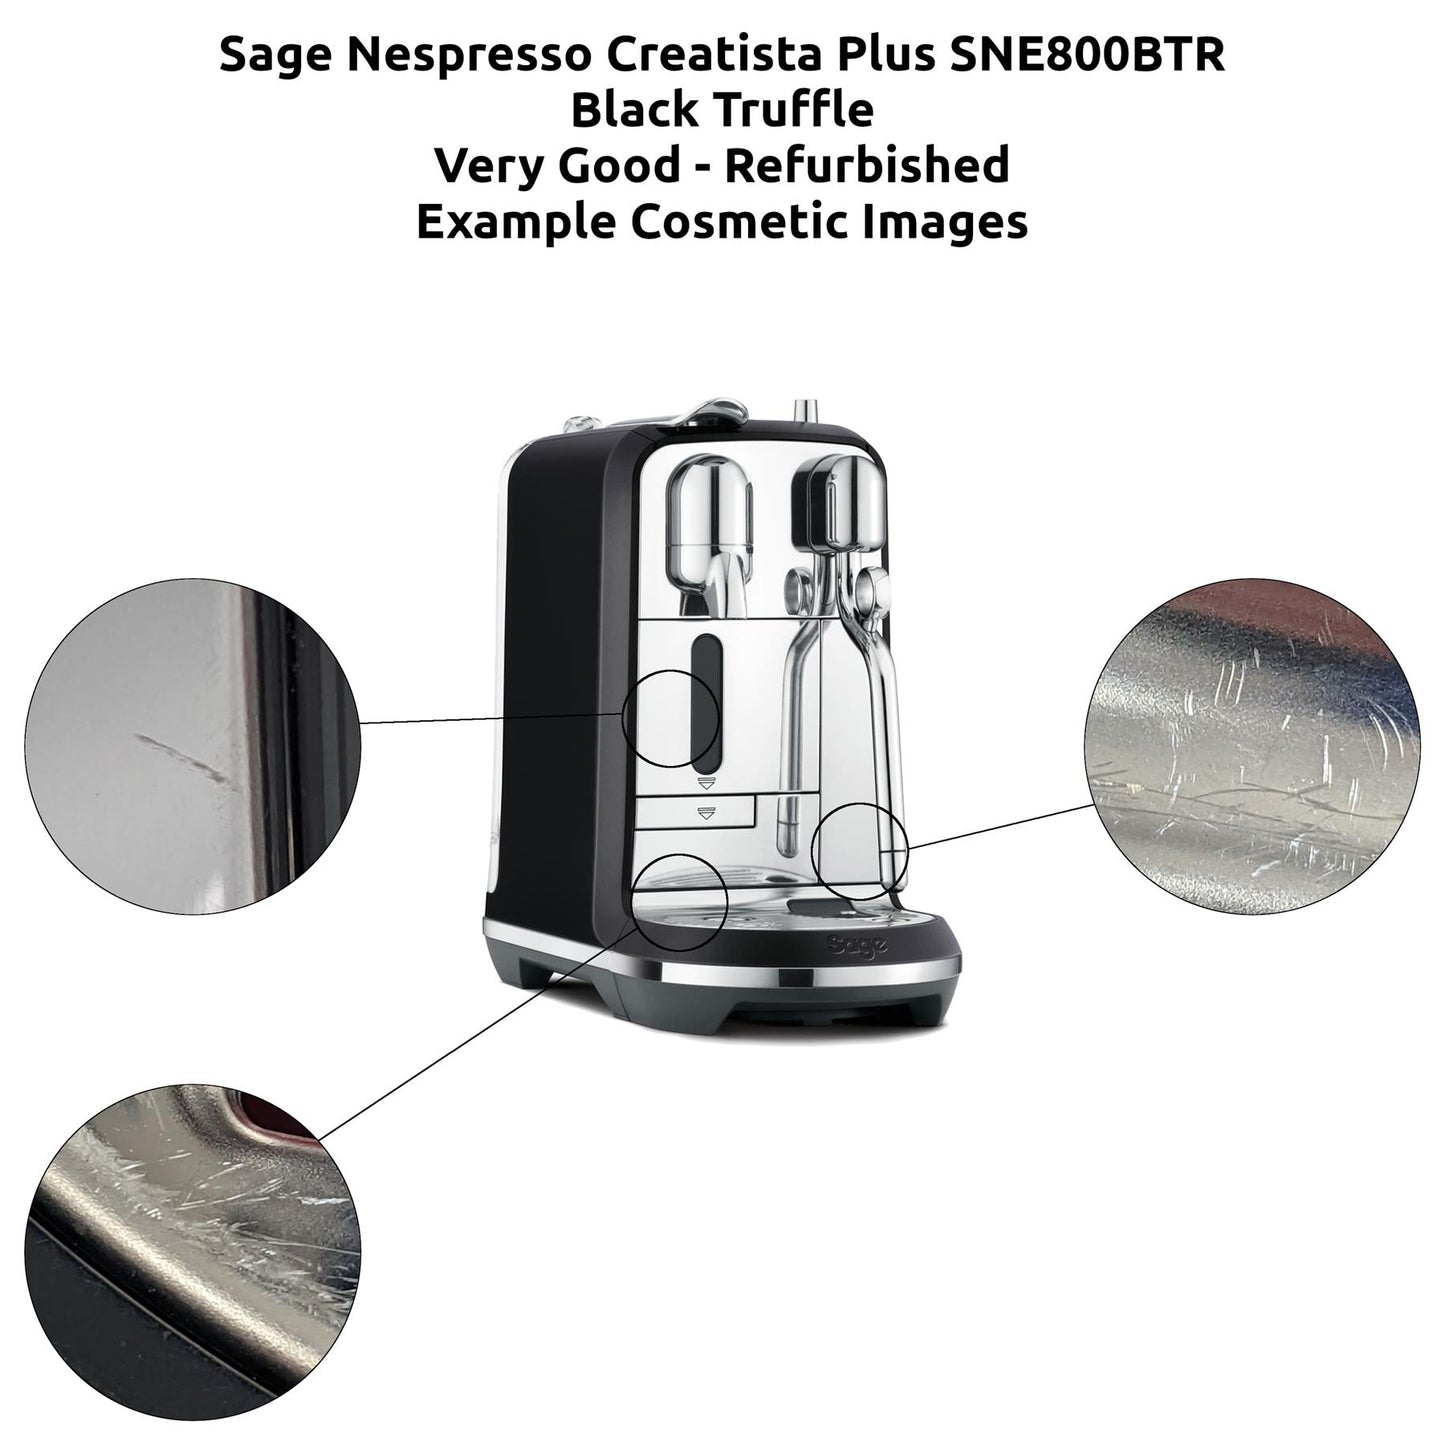 Sage The Creatista Plus BNE800/SNE800 Coffee Machine